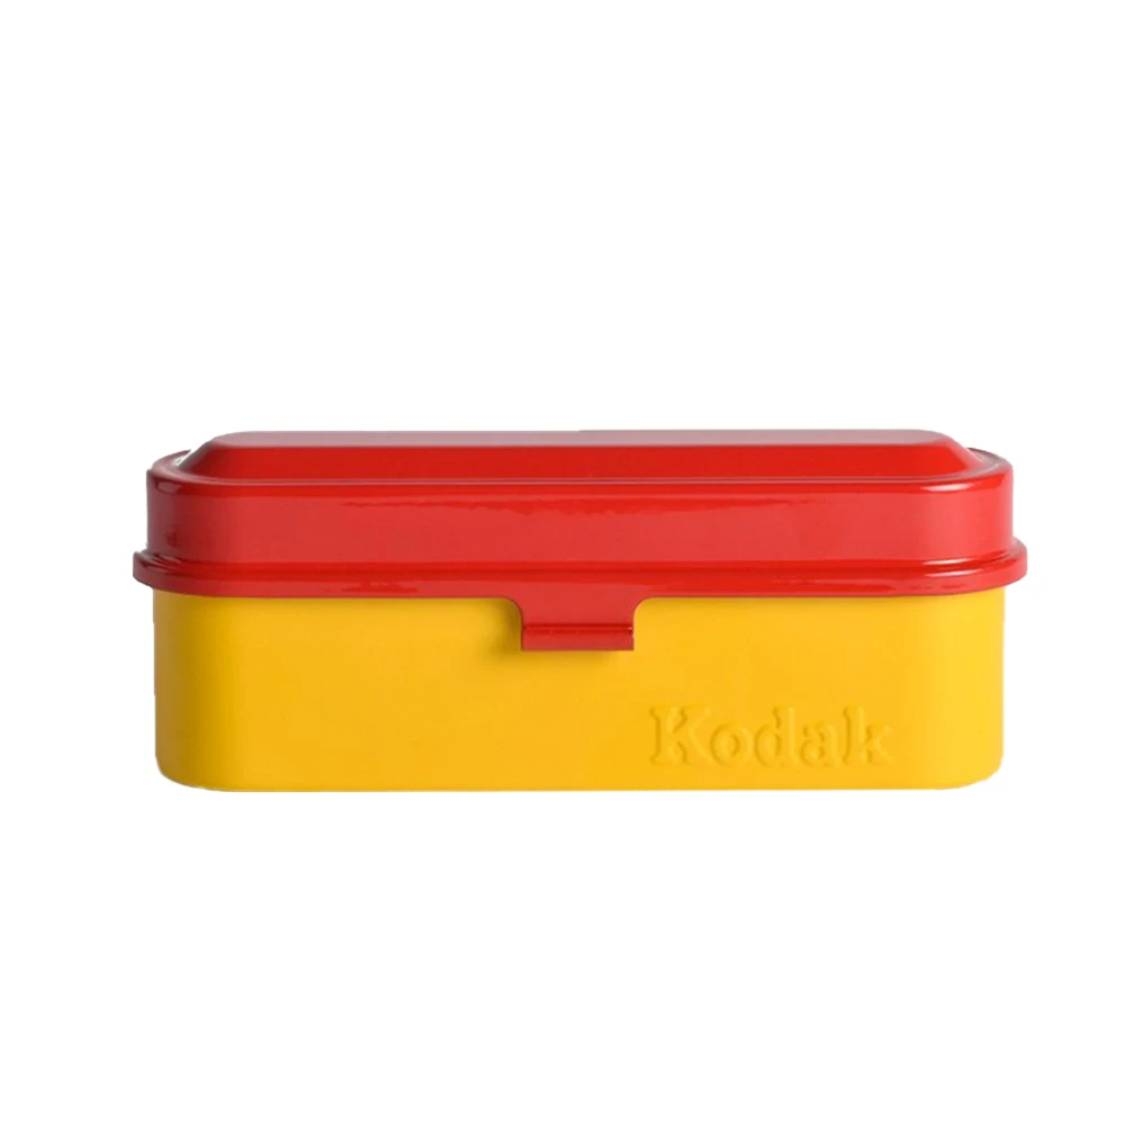 Kodak RETO 35 mm Film Case - Red/Yellow